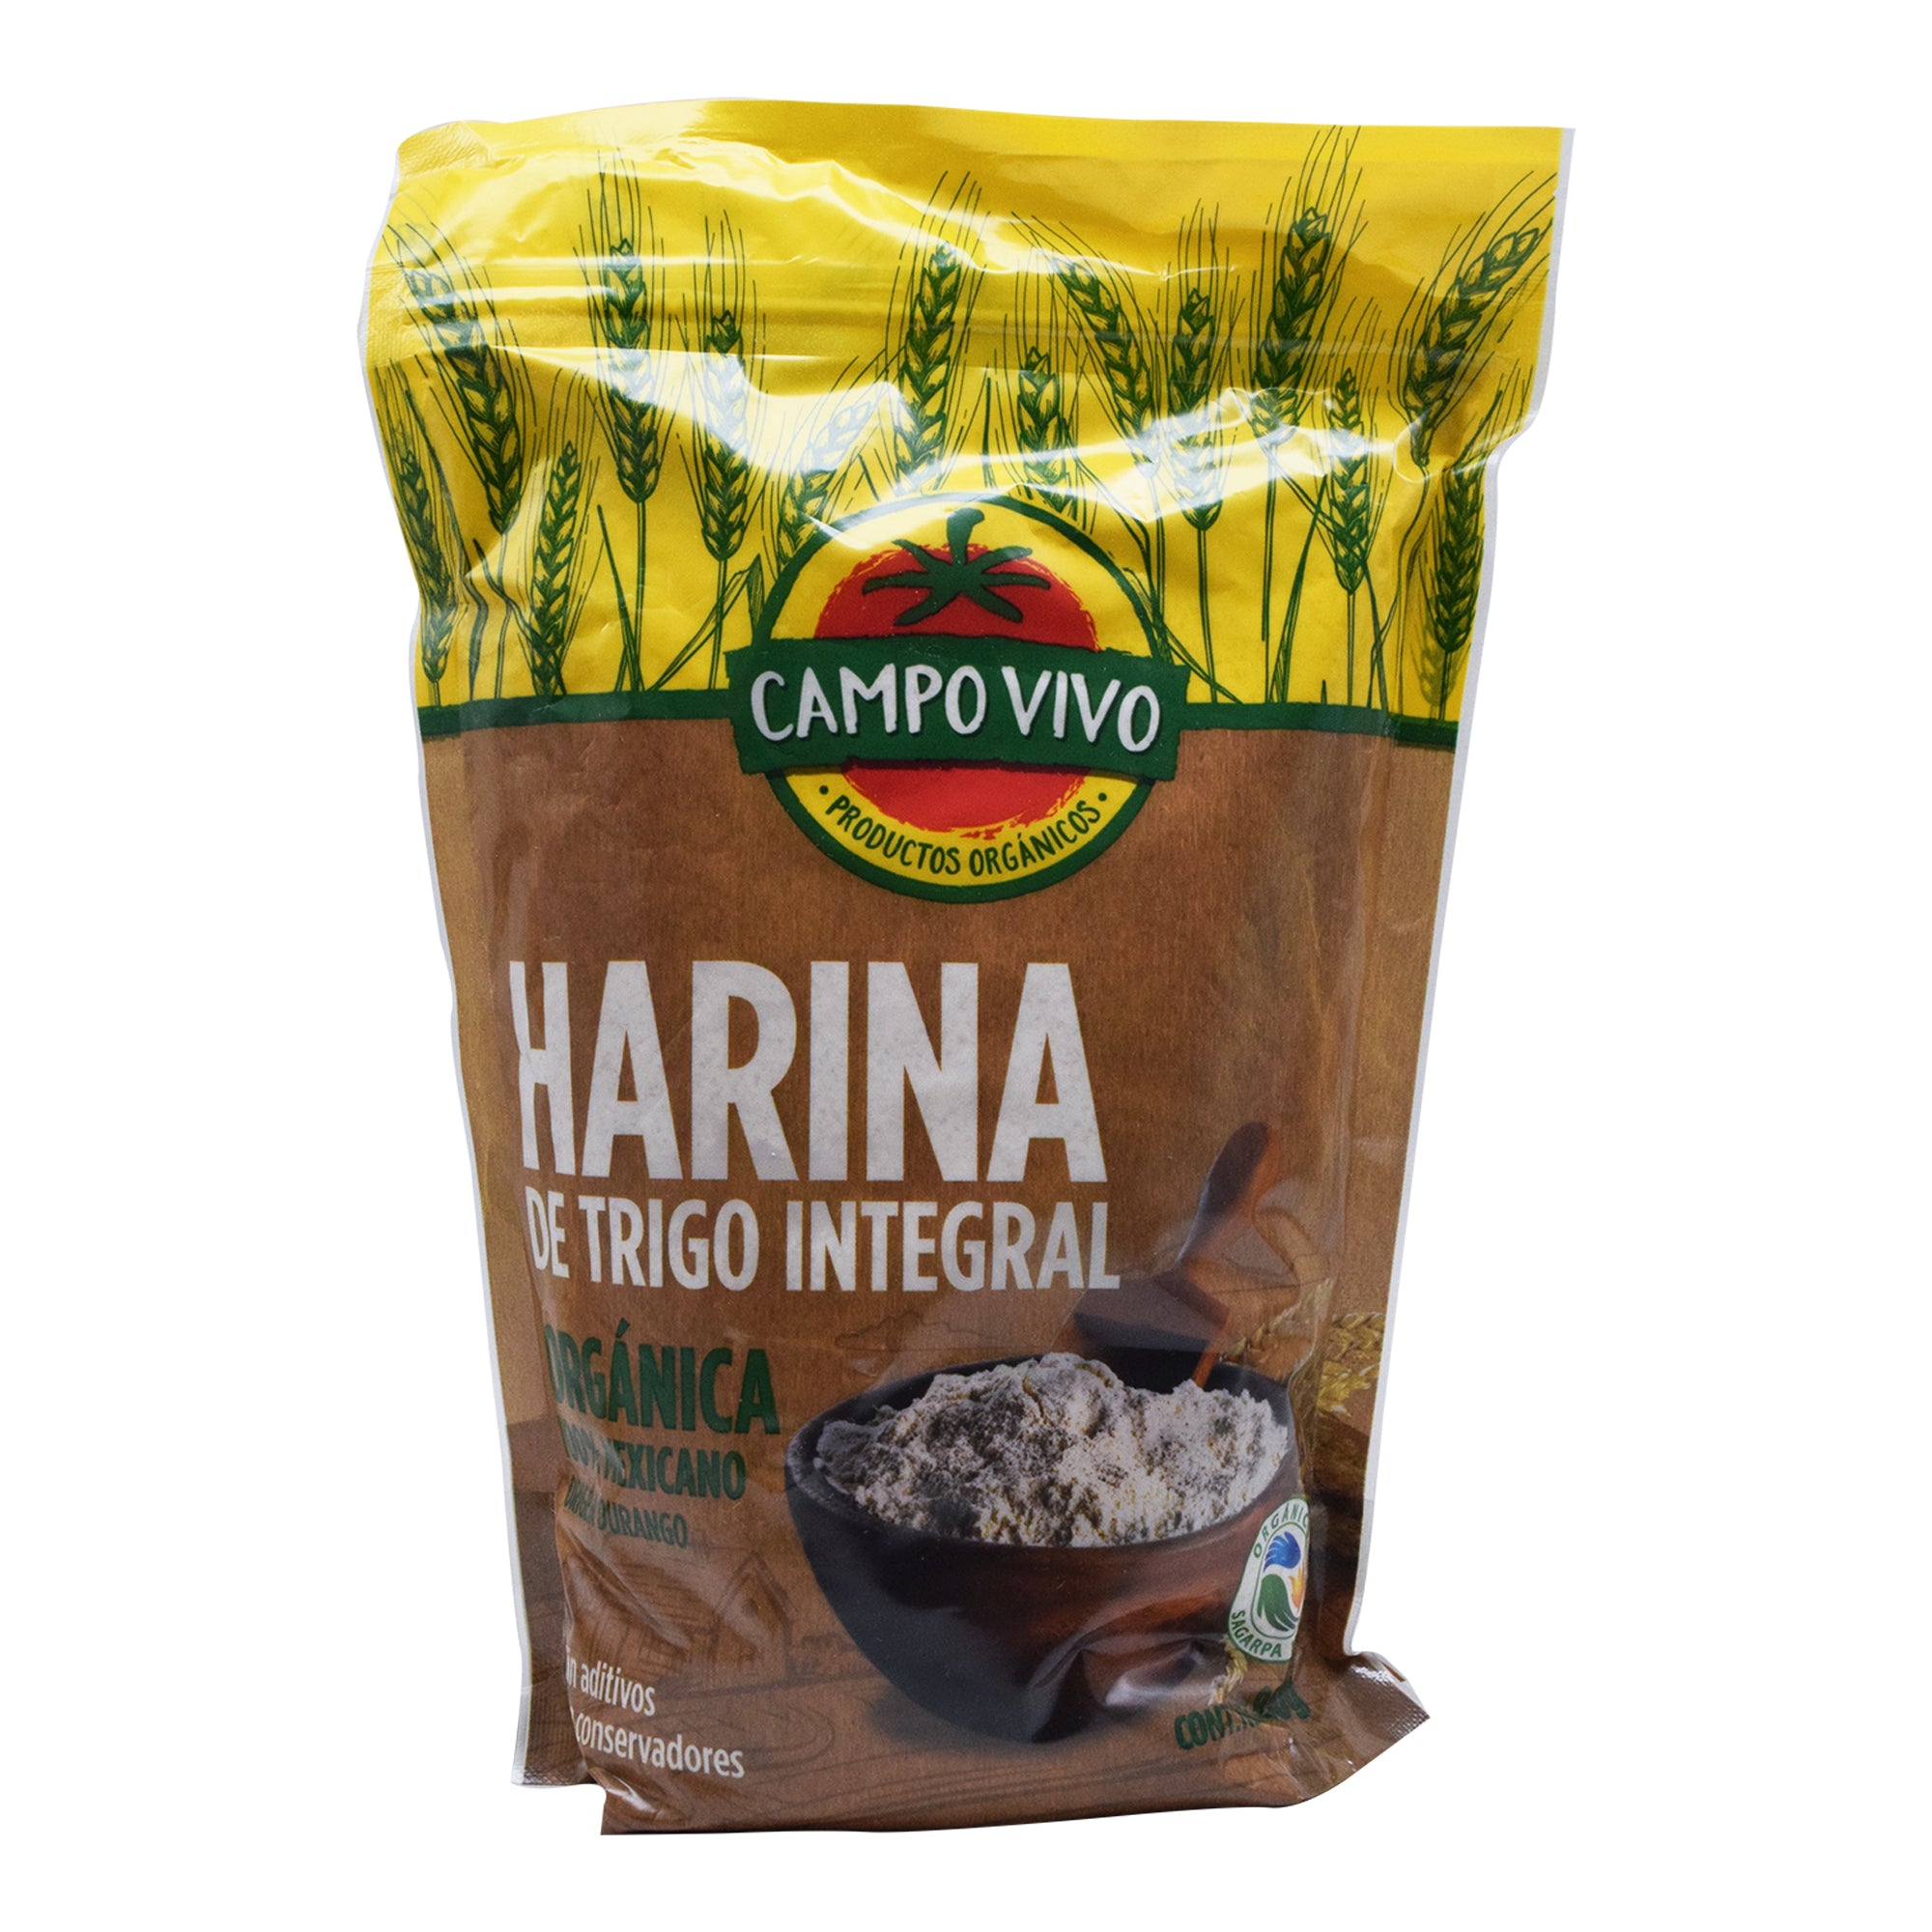 Harina de trigo integral organico 800 g